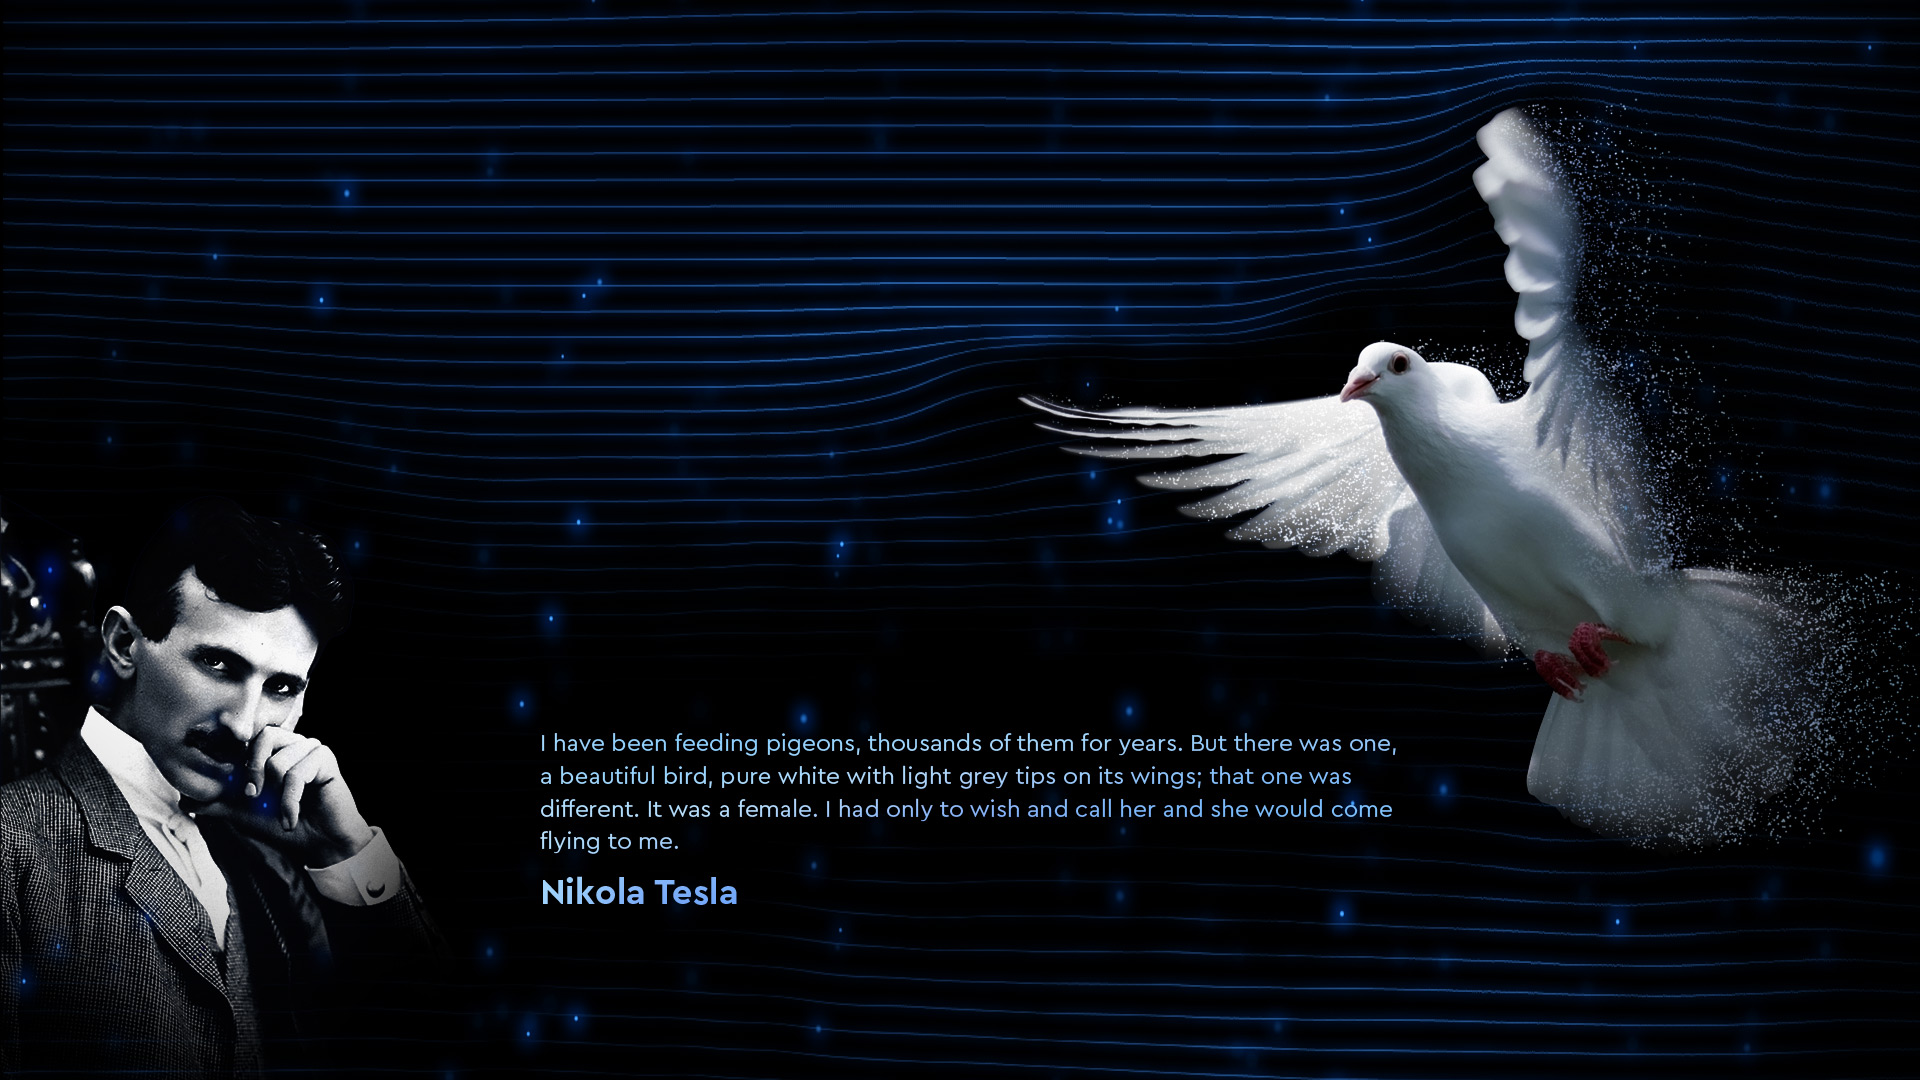 Tesla visual identity - Nikola Tesla about birds